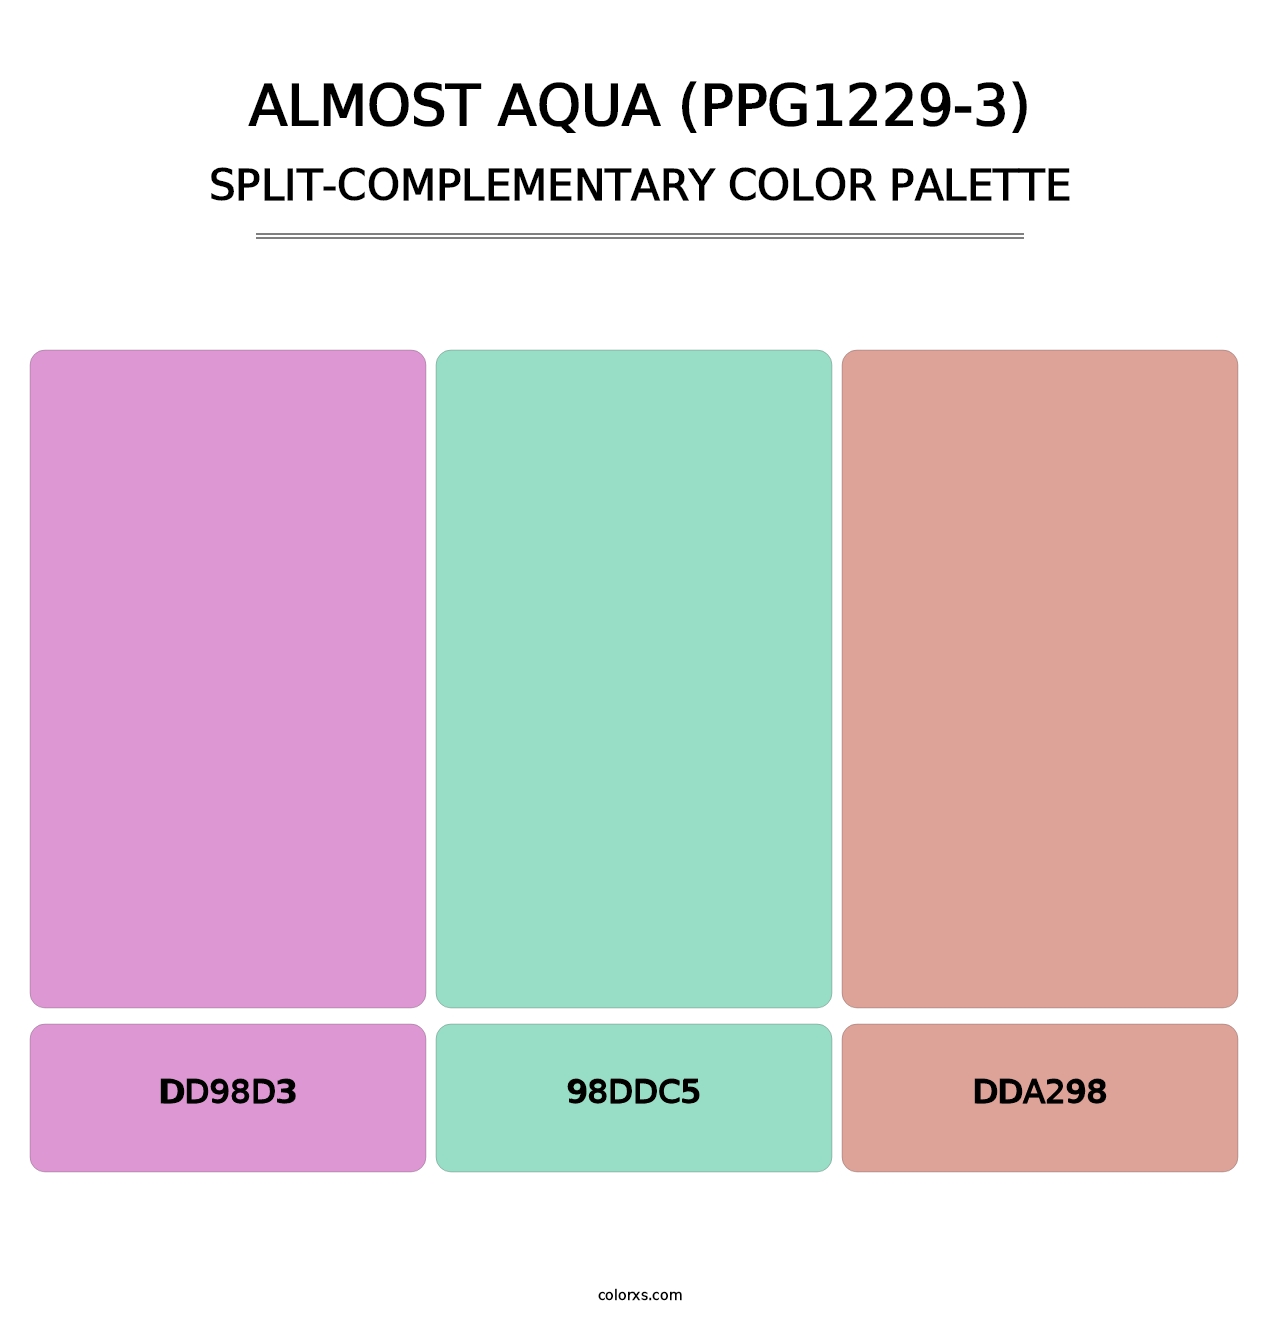 Almost Aqua (PPG1229-3) - Split-Complementary Color Palette